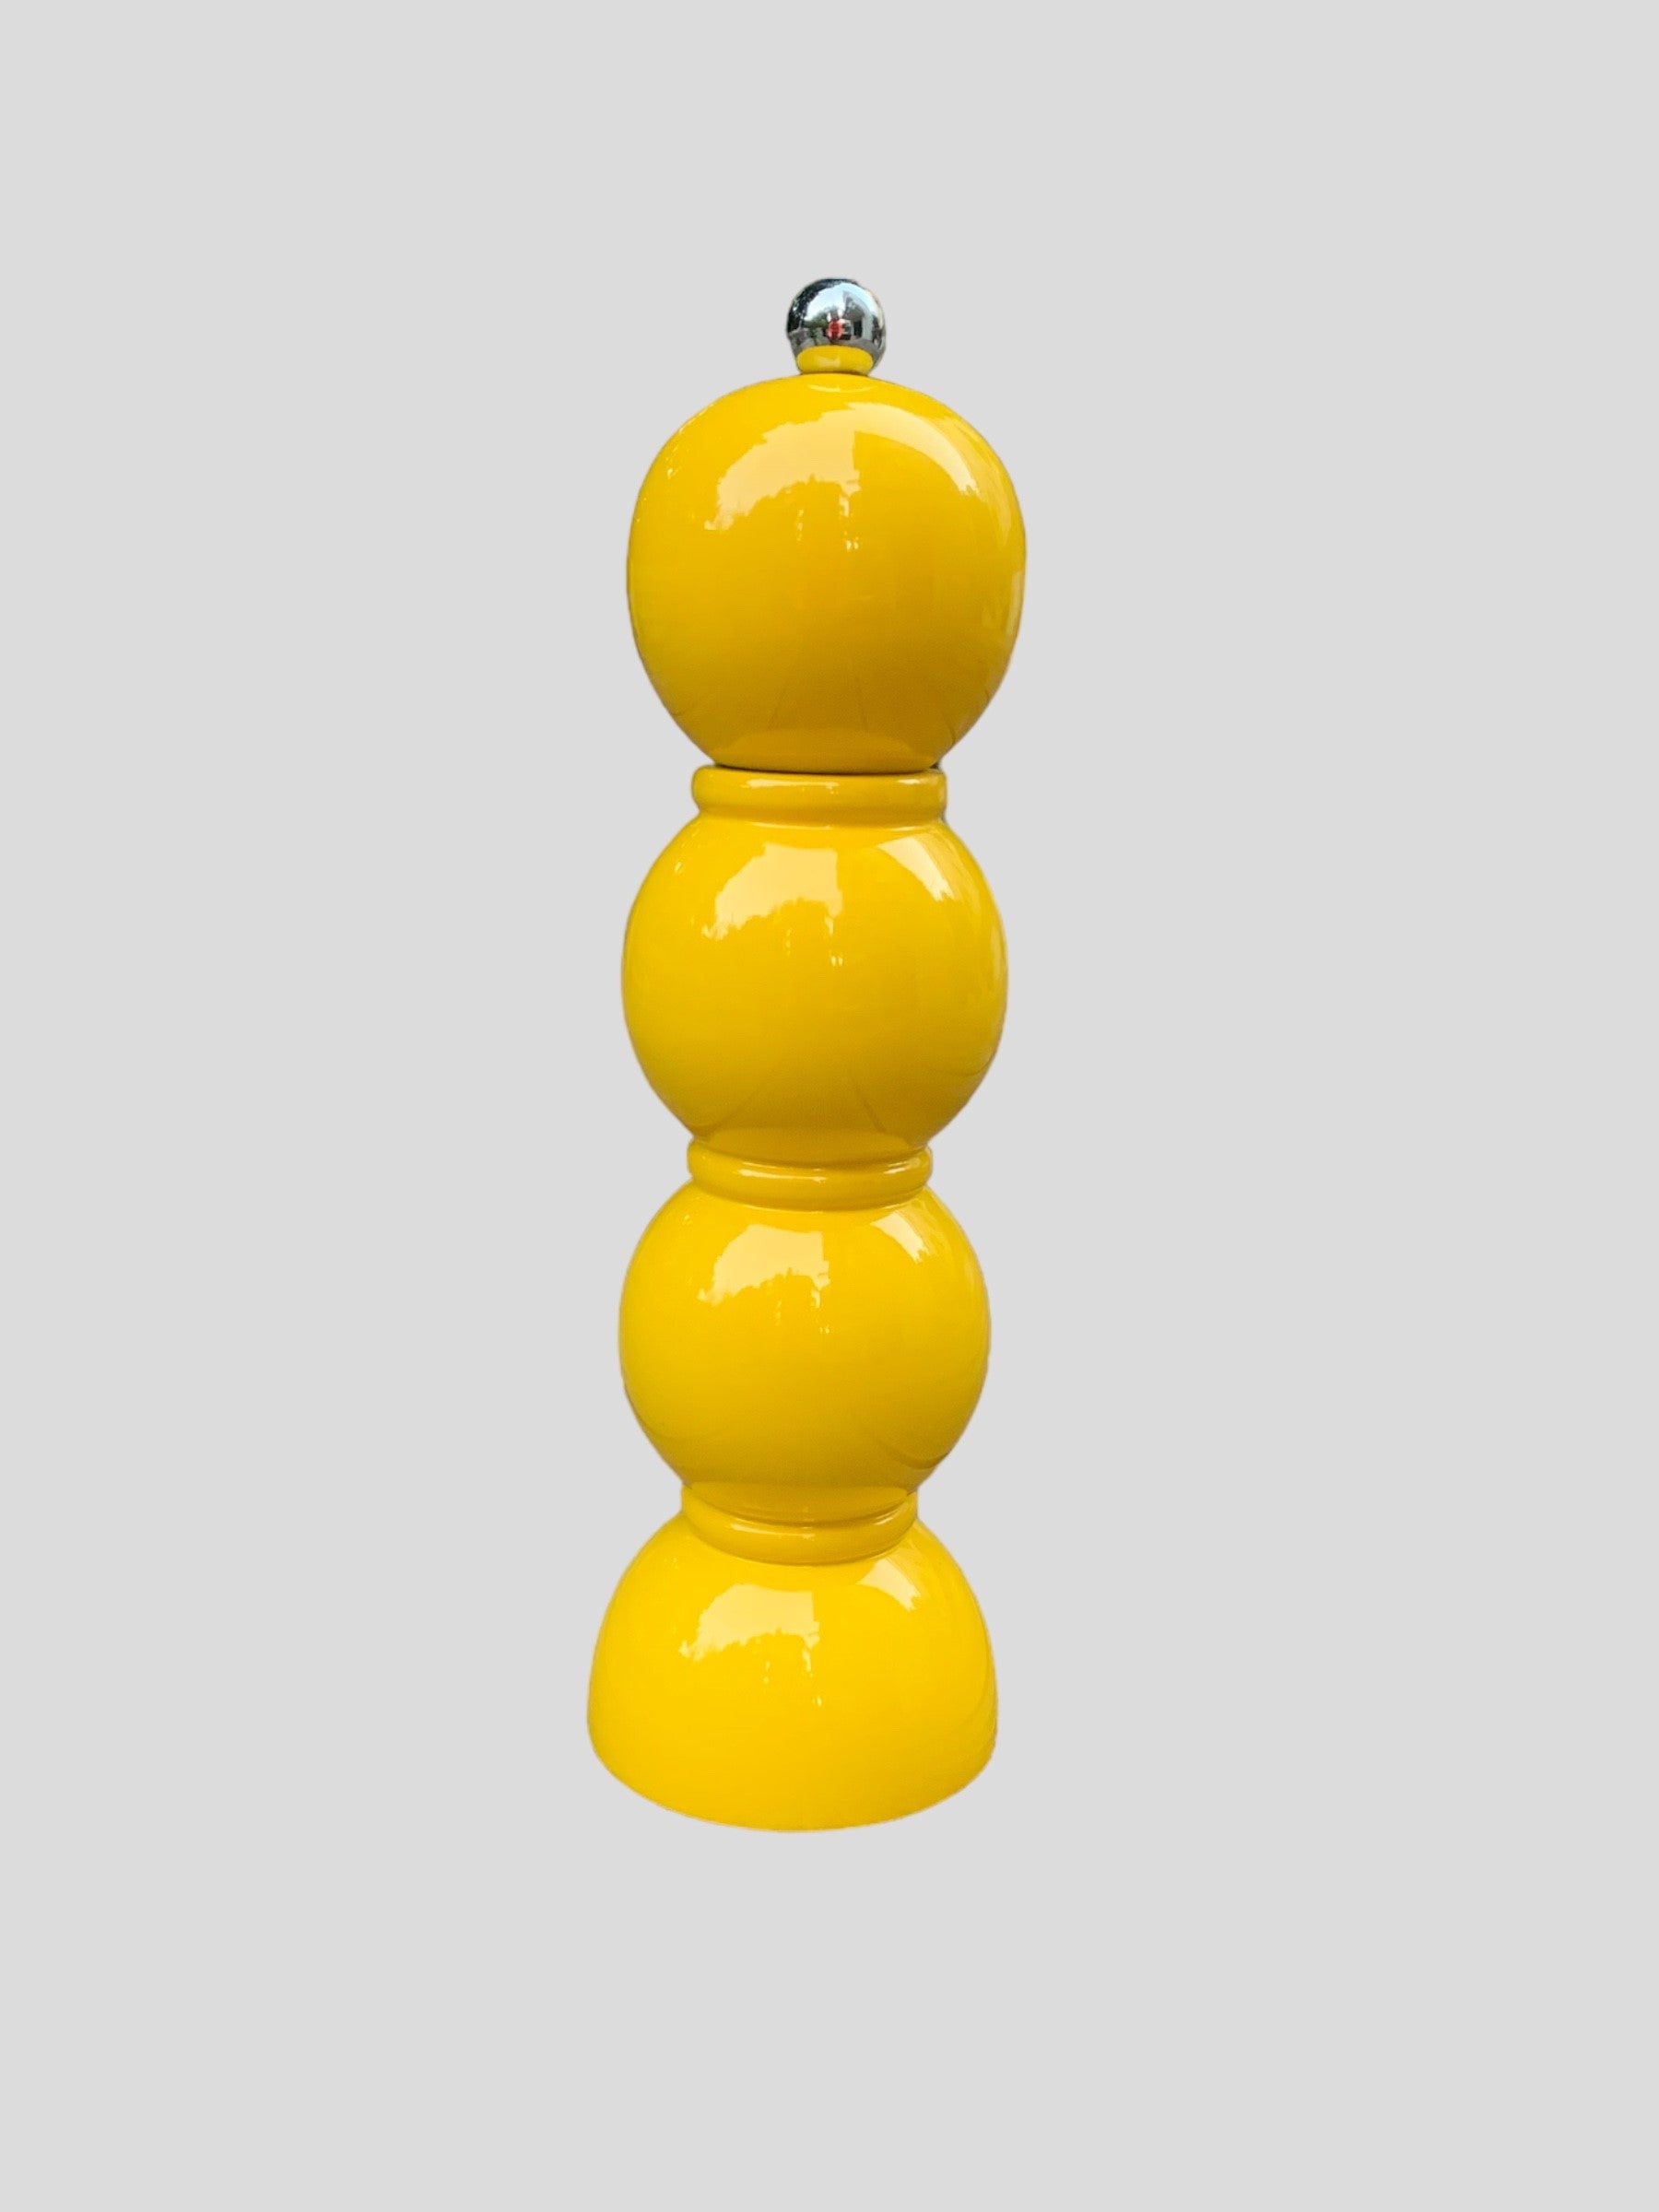 A yellow bobbin shaped salt grinder from Addison Ross